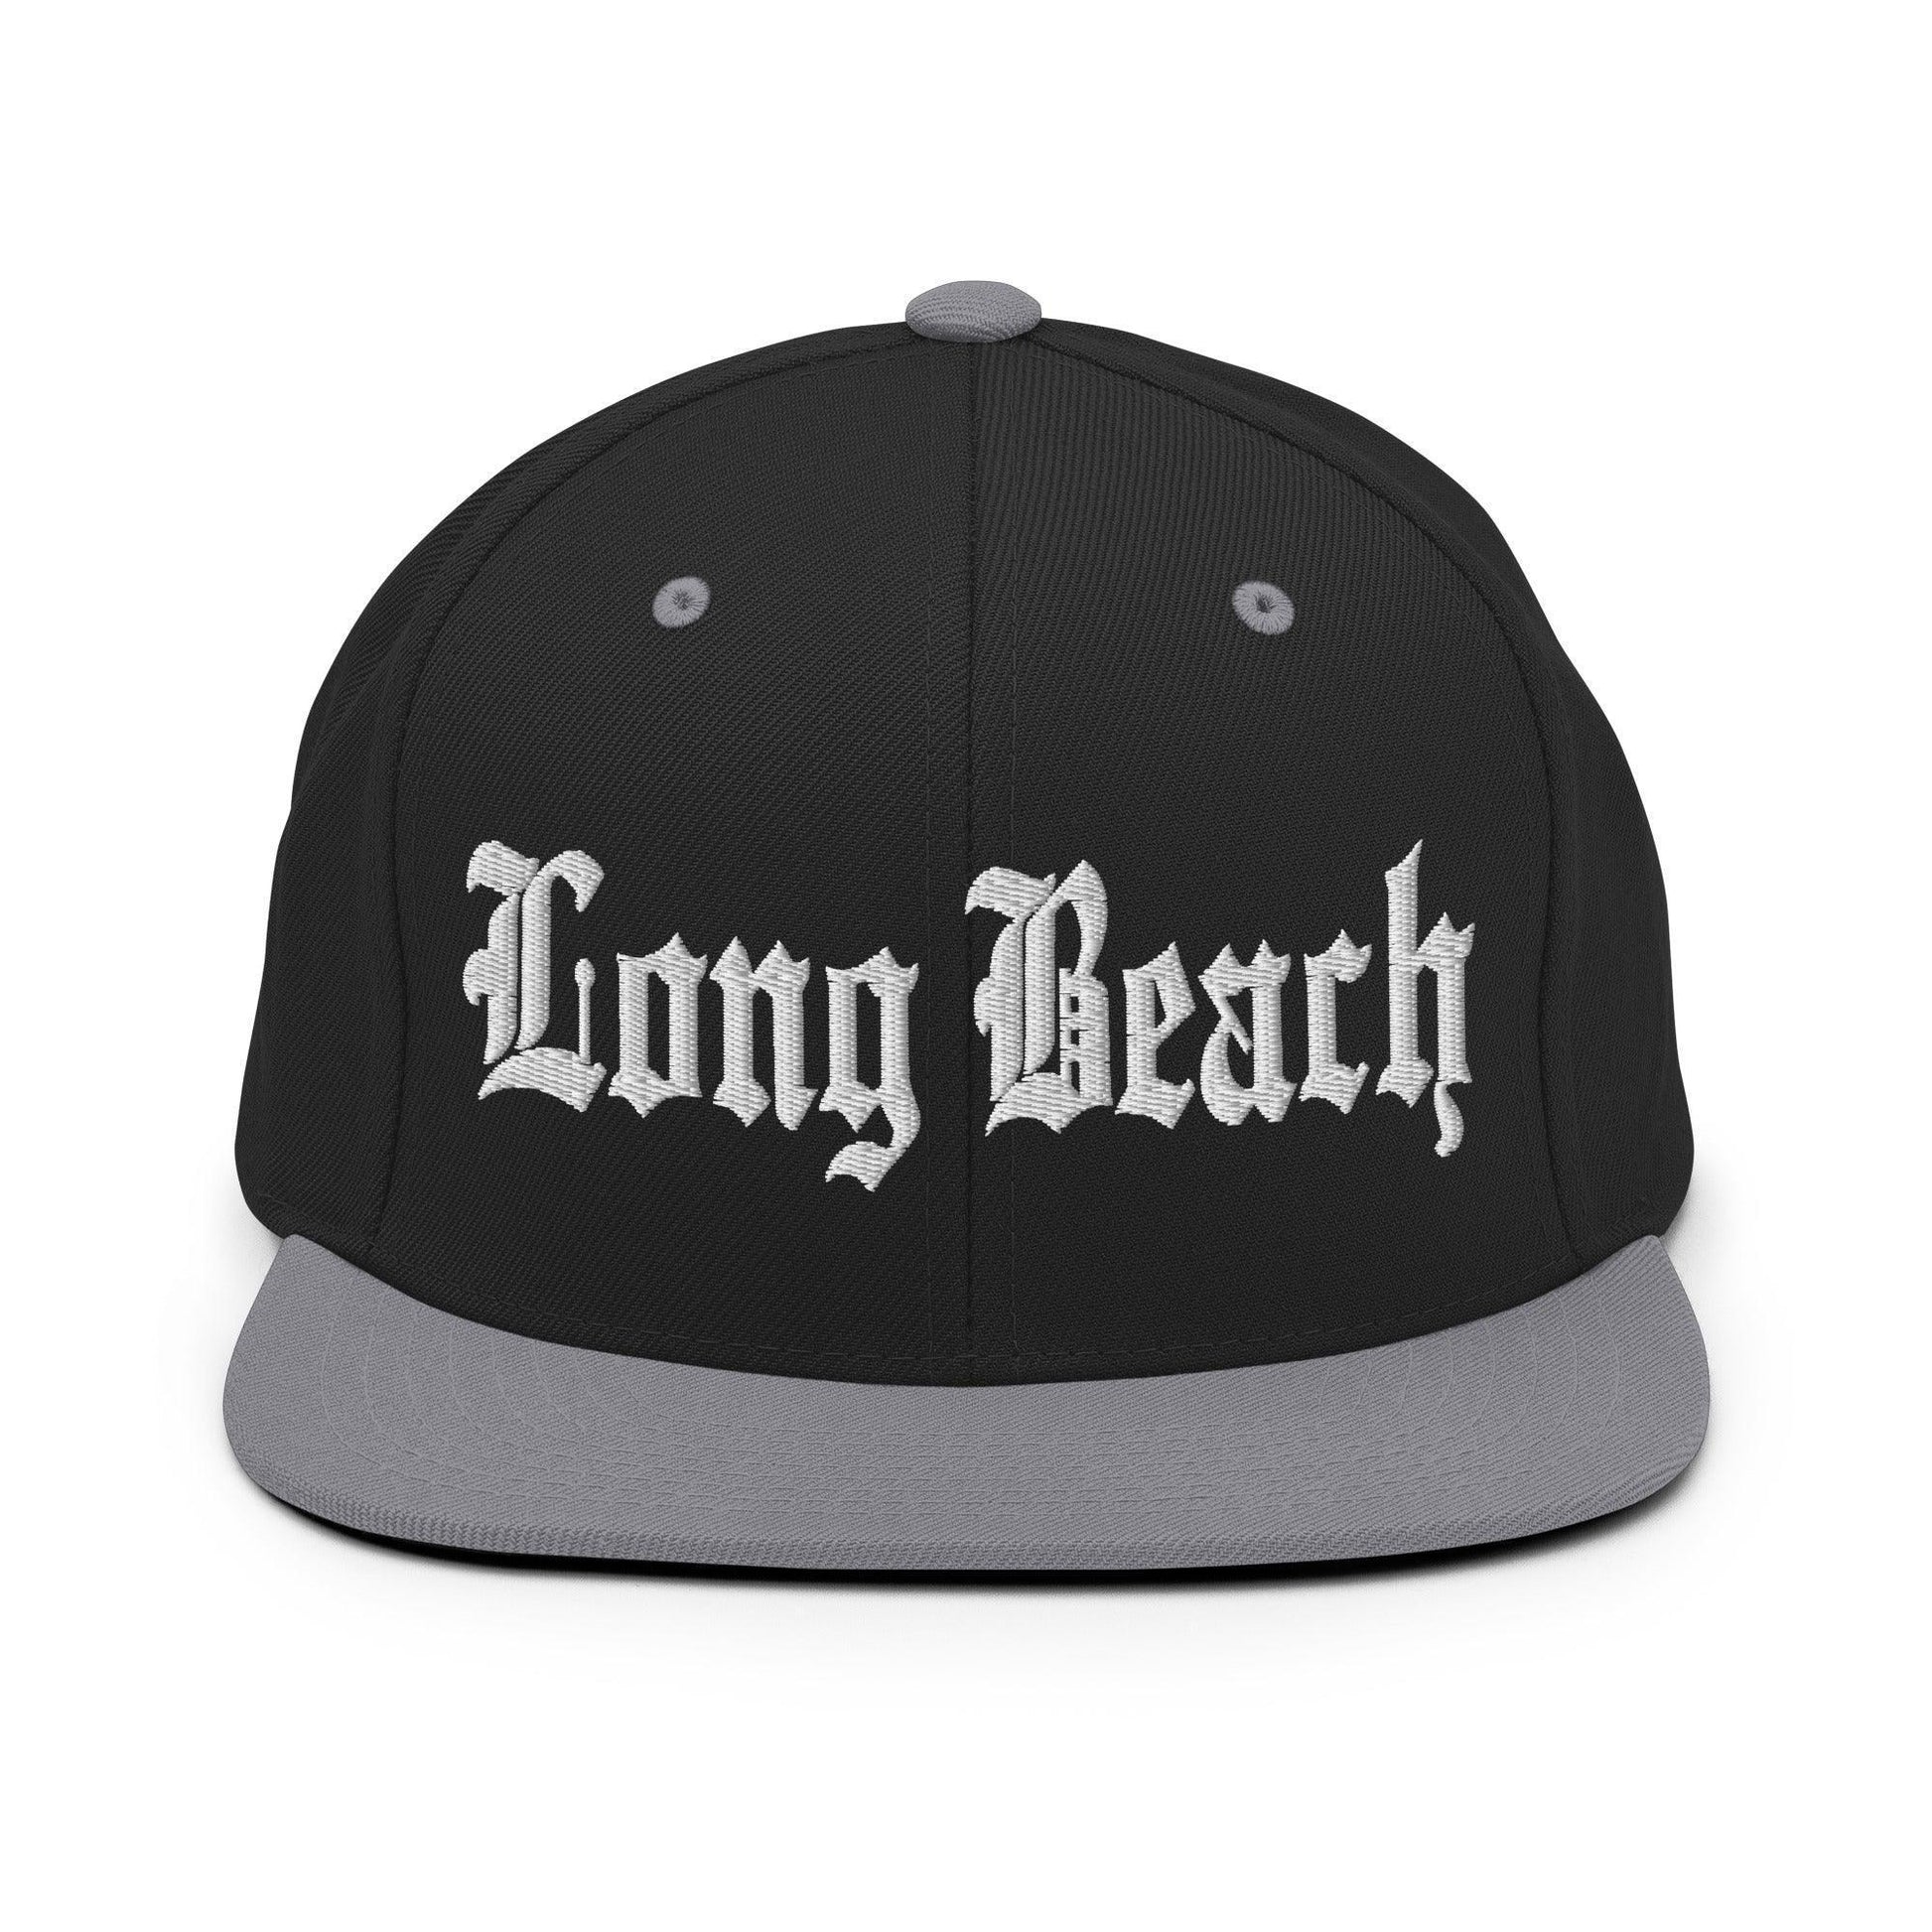 Long Beach Old English Snapback Hat Black/ Silver